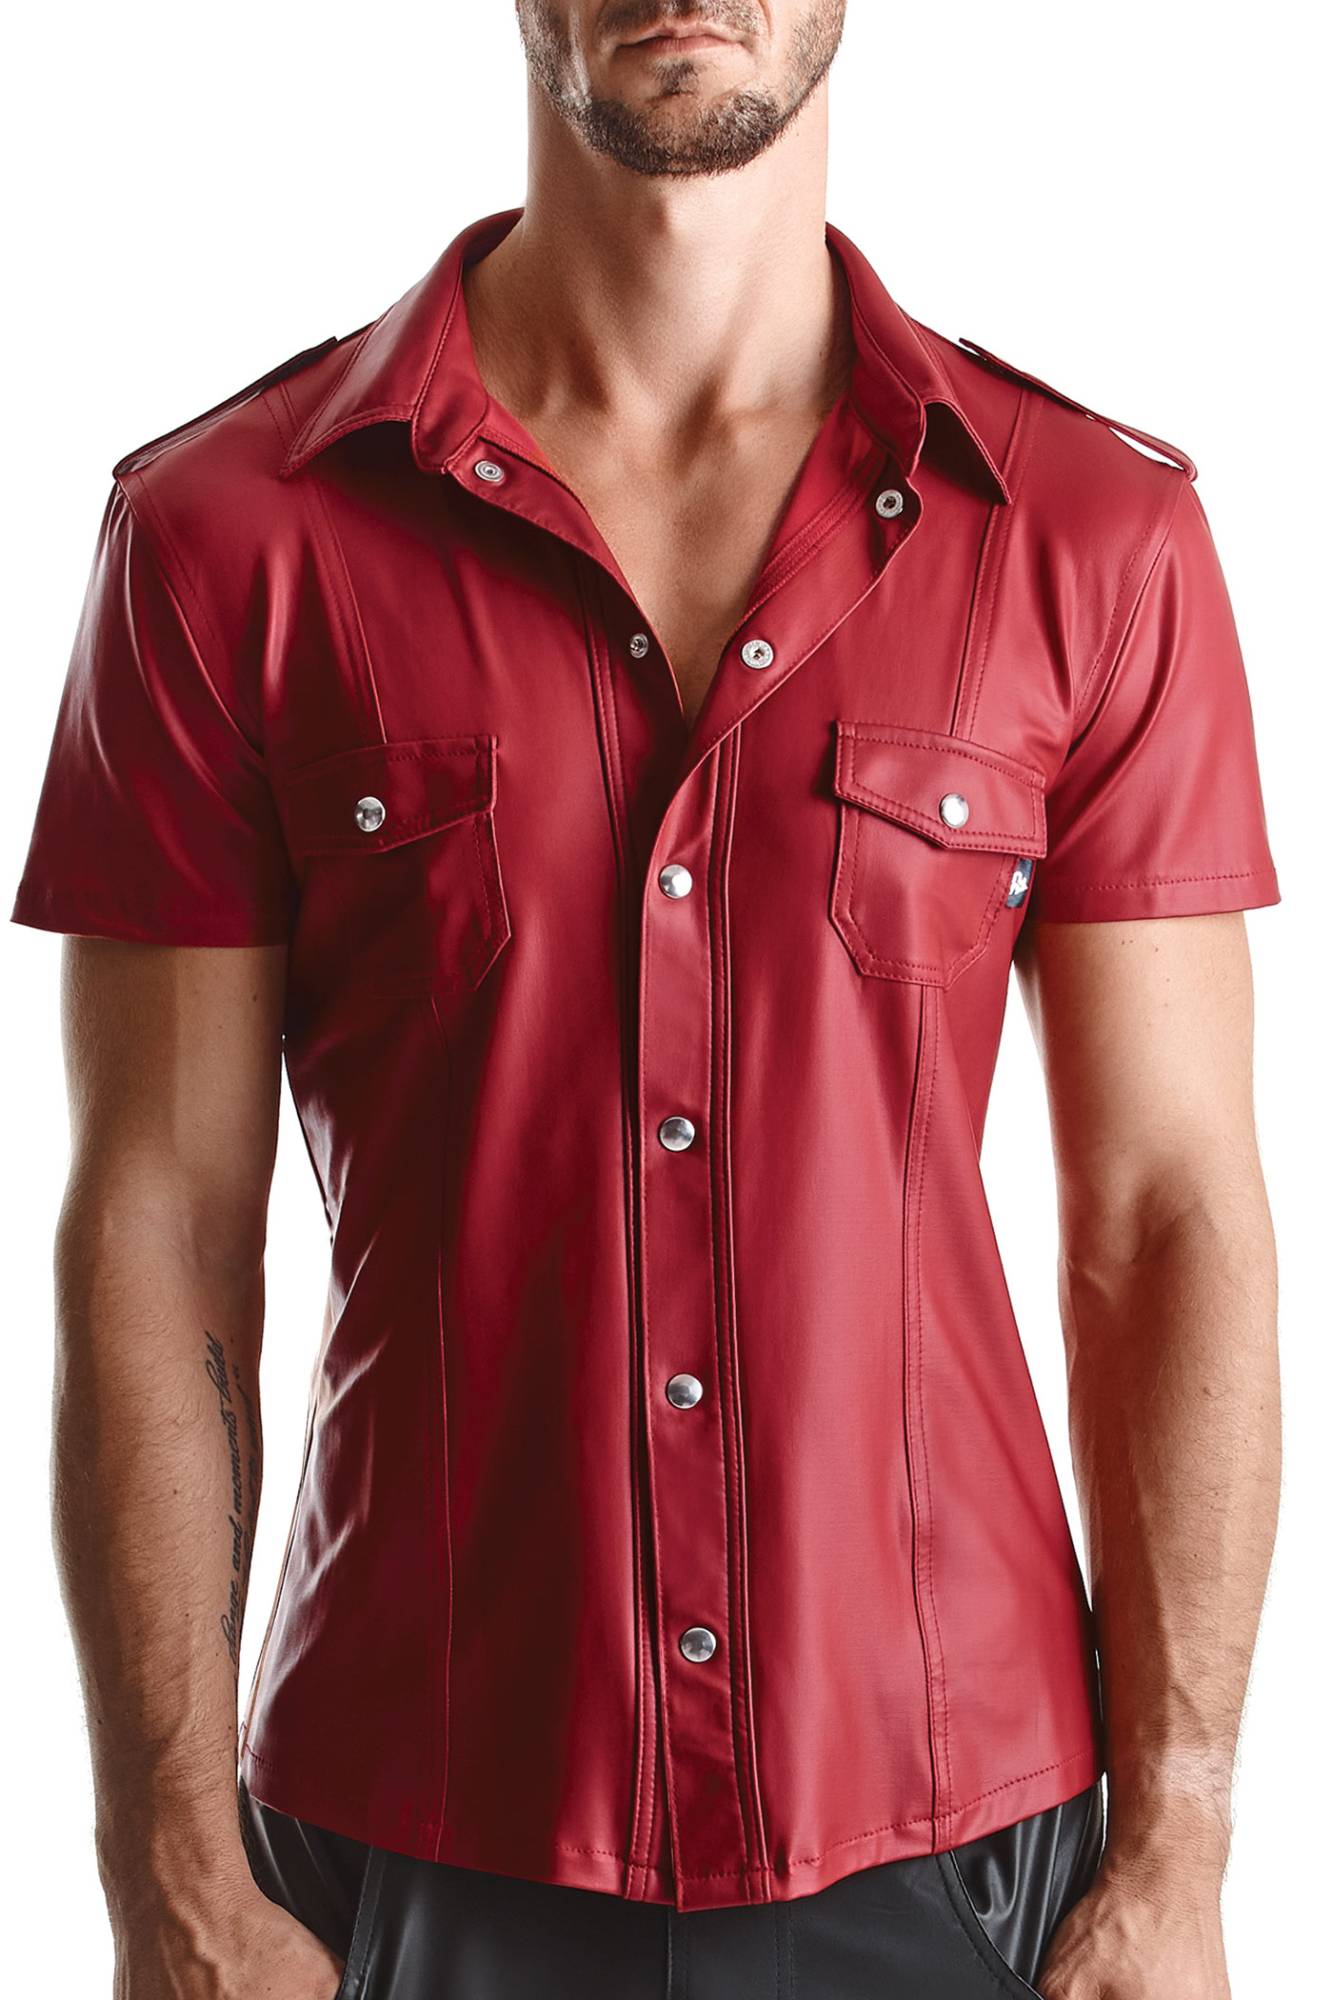 RMCarlo001 – red shirt – XL